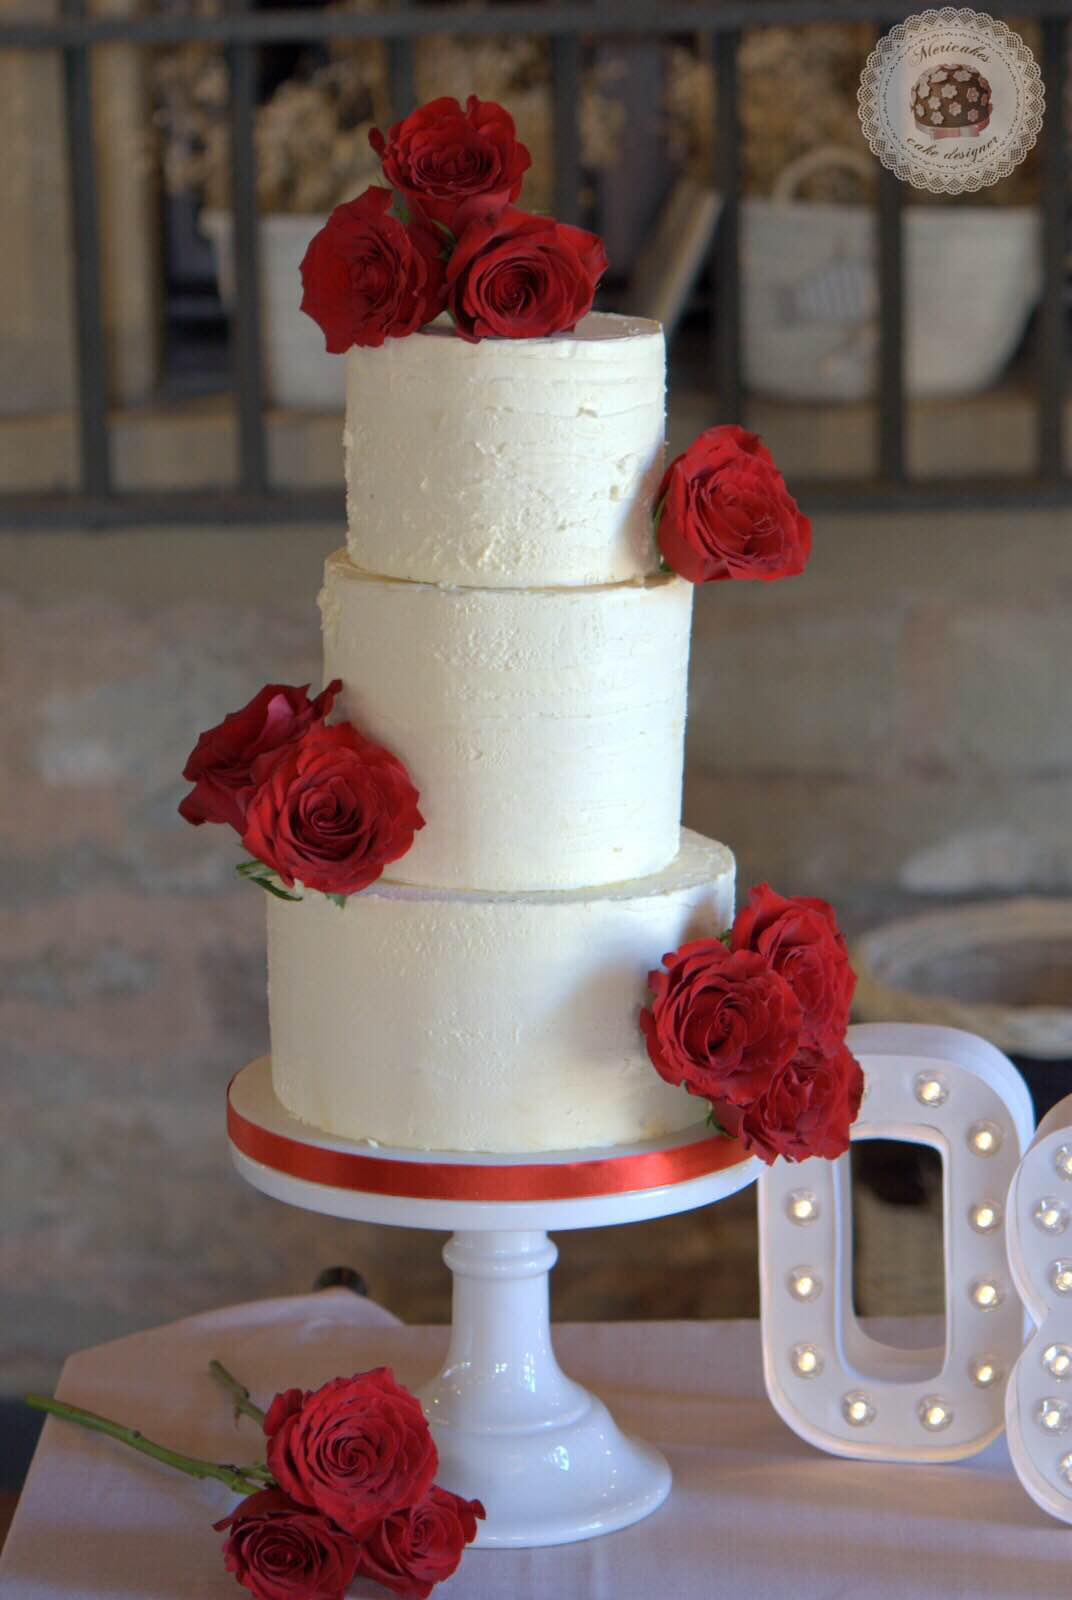 naked-cake-wedding-cake-tarta-boda-layer-cake-barcelona-boda-pastel-boda-red-velvet-red-roses-flores-mericakes-2